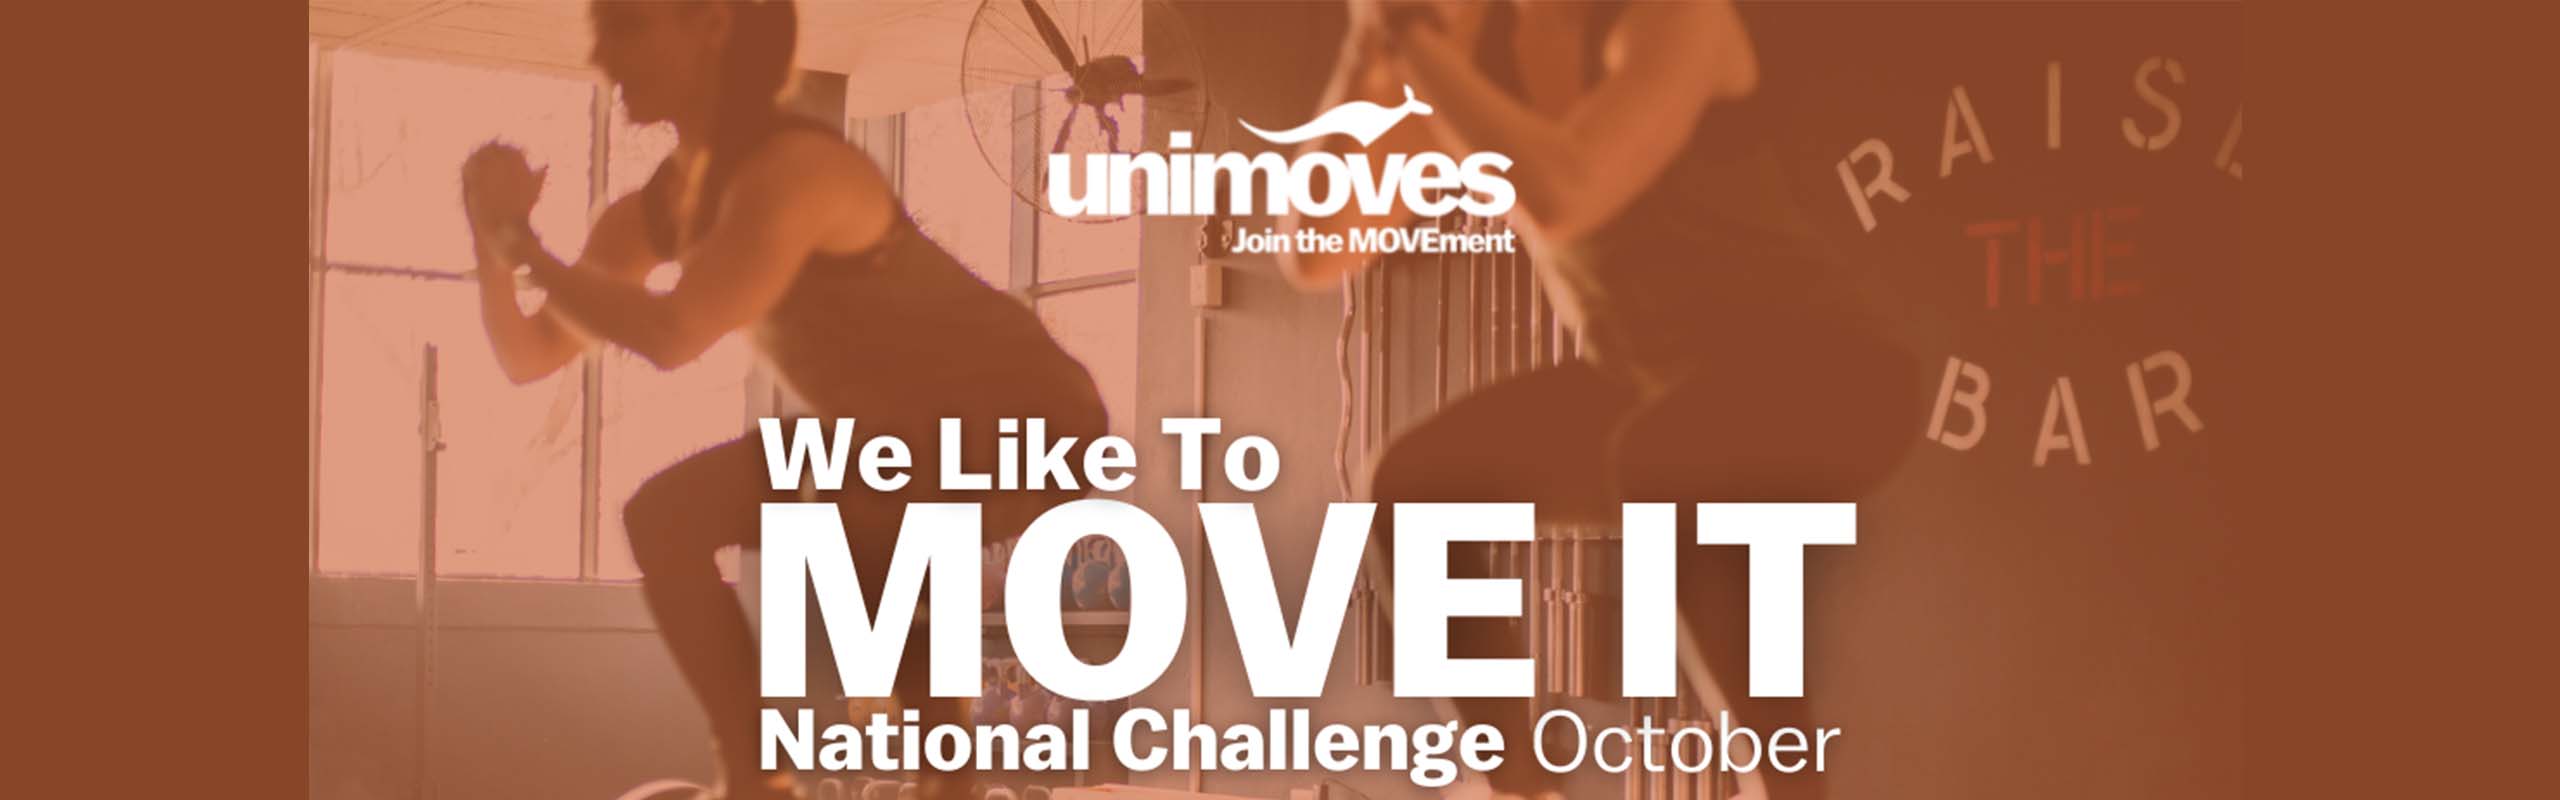 DeakinMOVES National MOVE IT challenge header